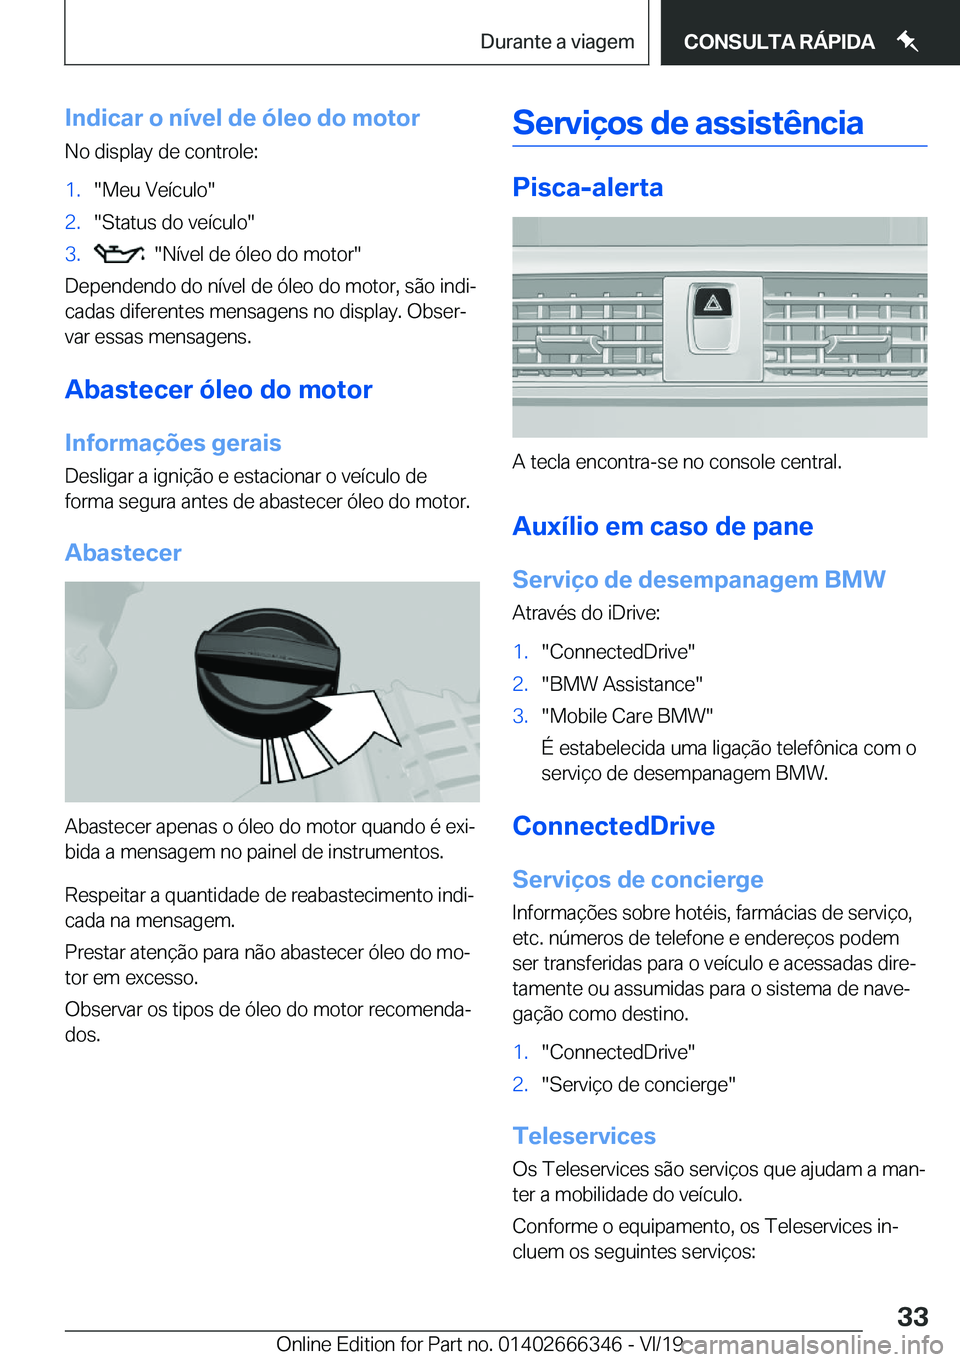 BMW 4 SERIES COUPE 2020  Manual do condutor (in Portuguese) �I�n�d�i�c�a�r��o��n�